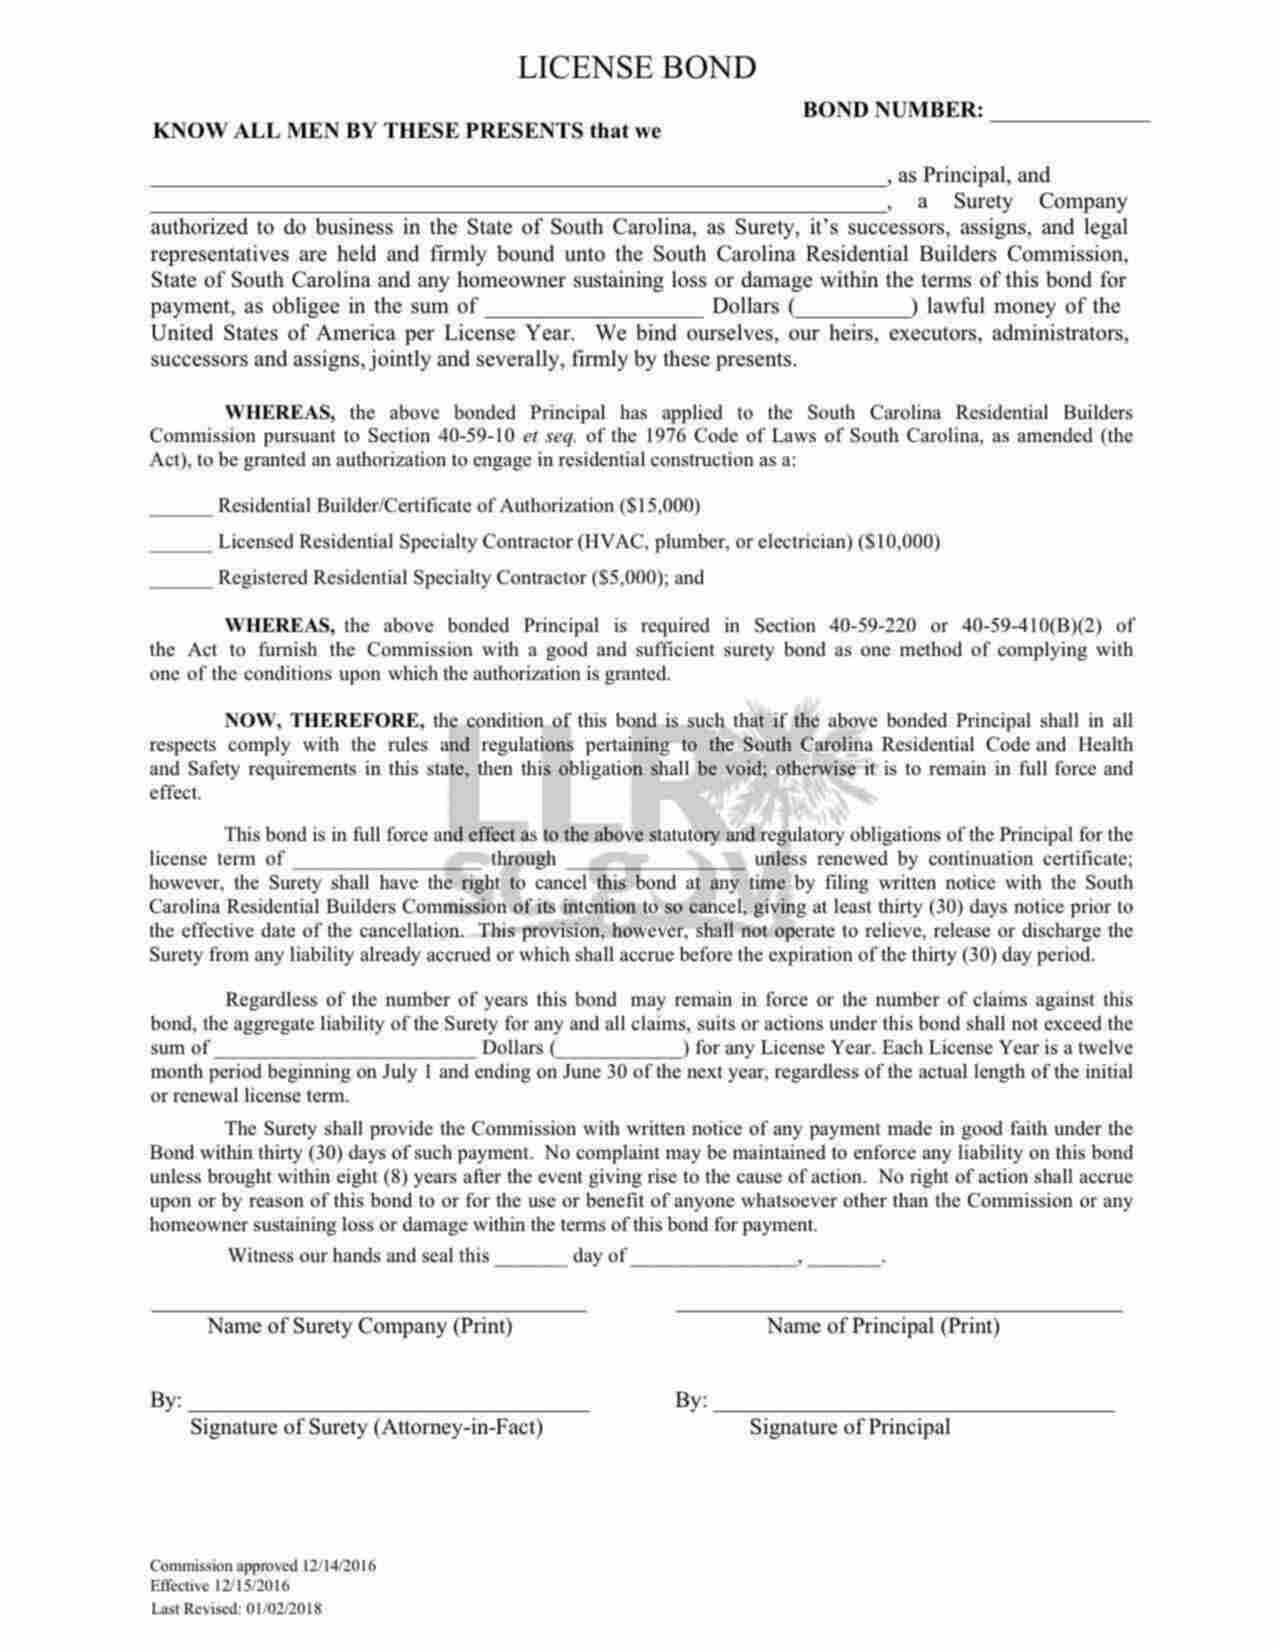 South Carolina Residential Builder/Certificate of Authority Bond Form